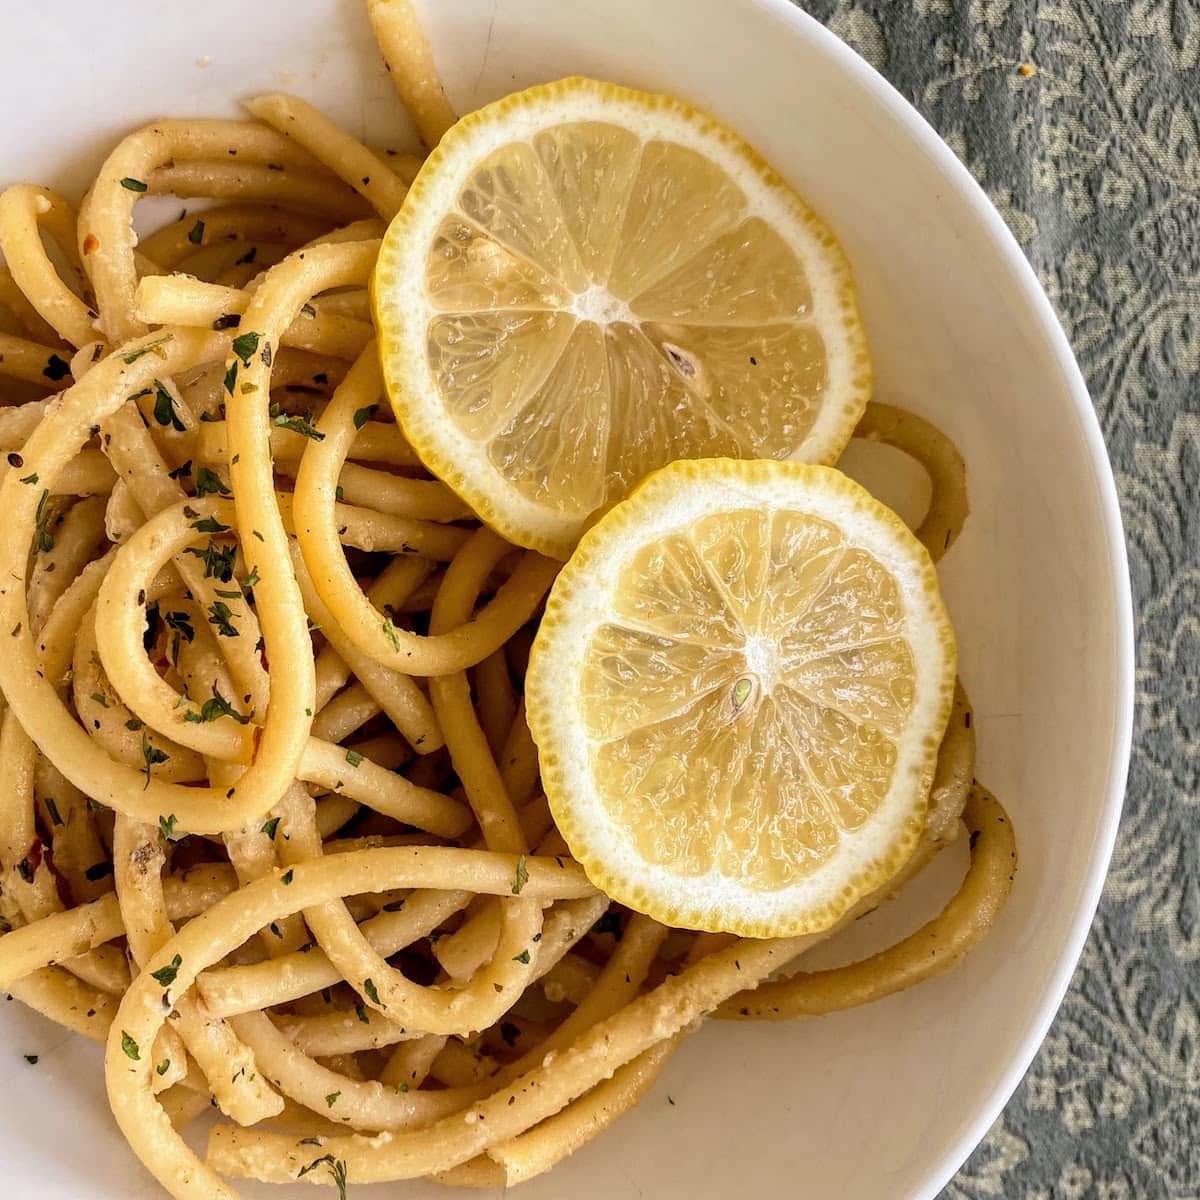 lemony garlic pasta in bowl with lemon slices 